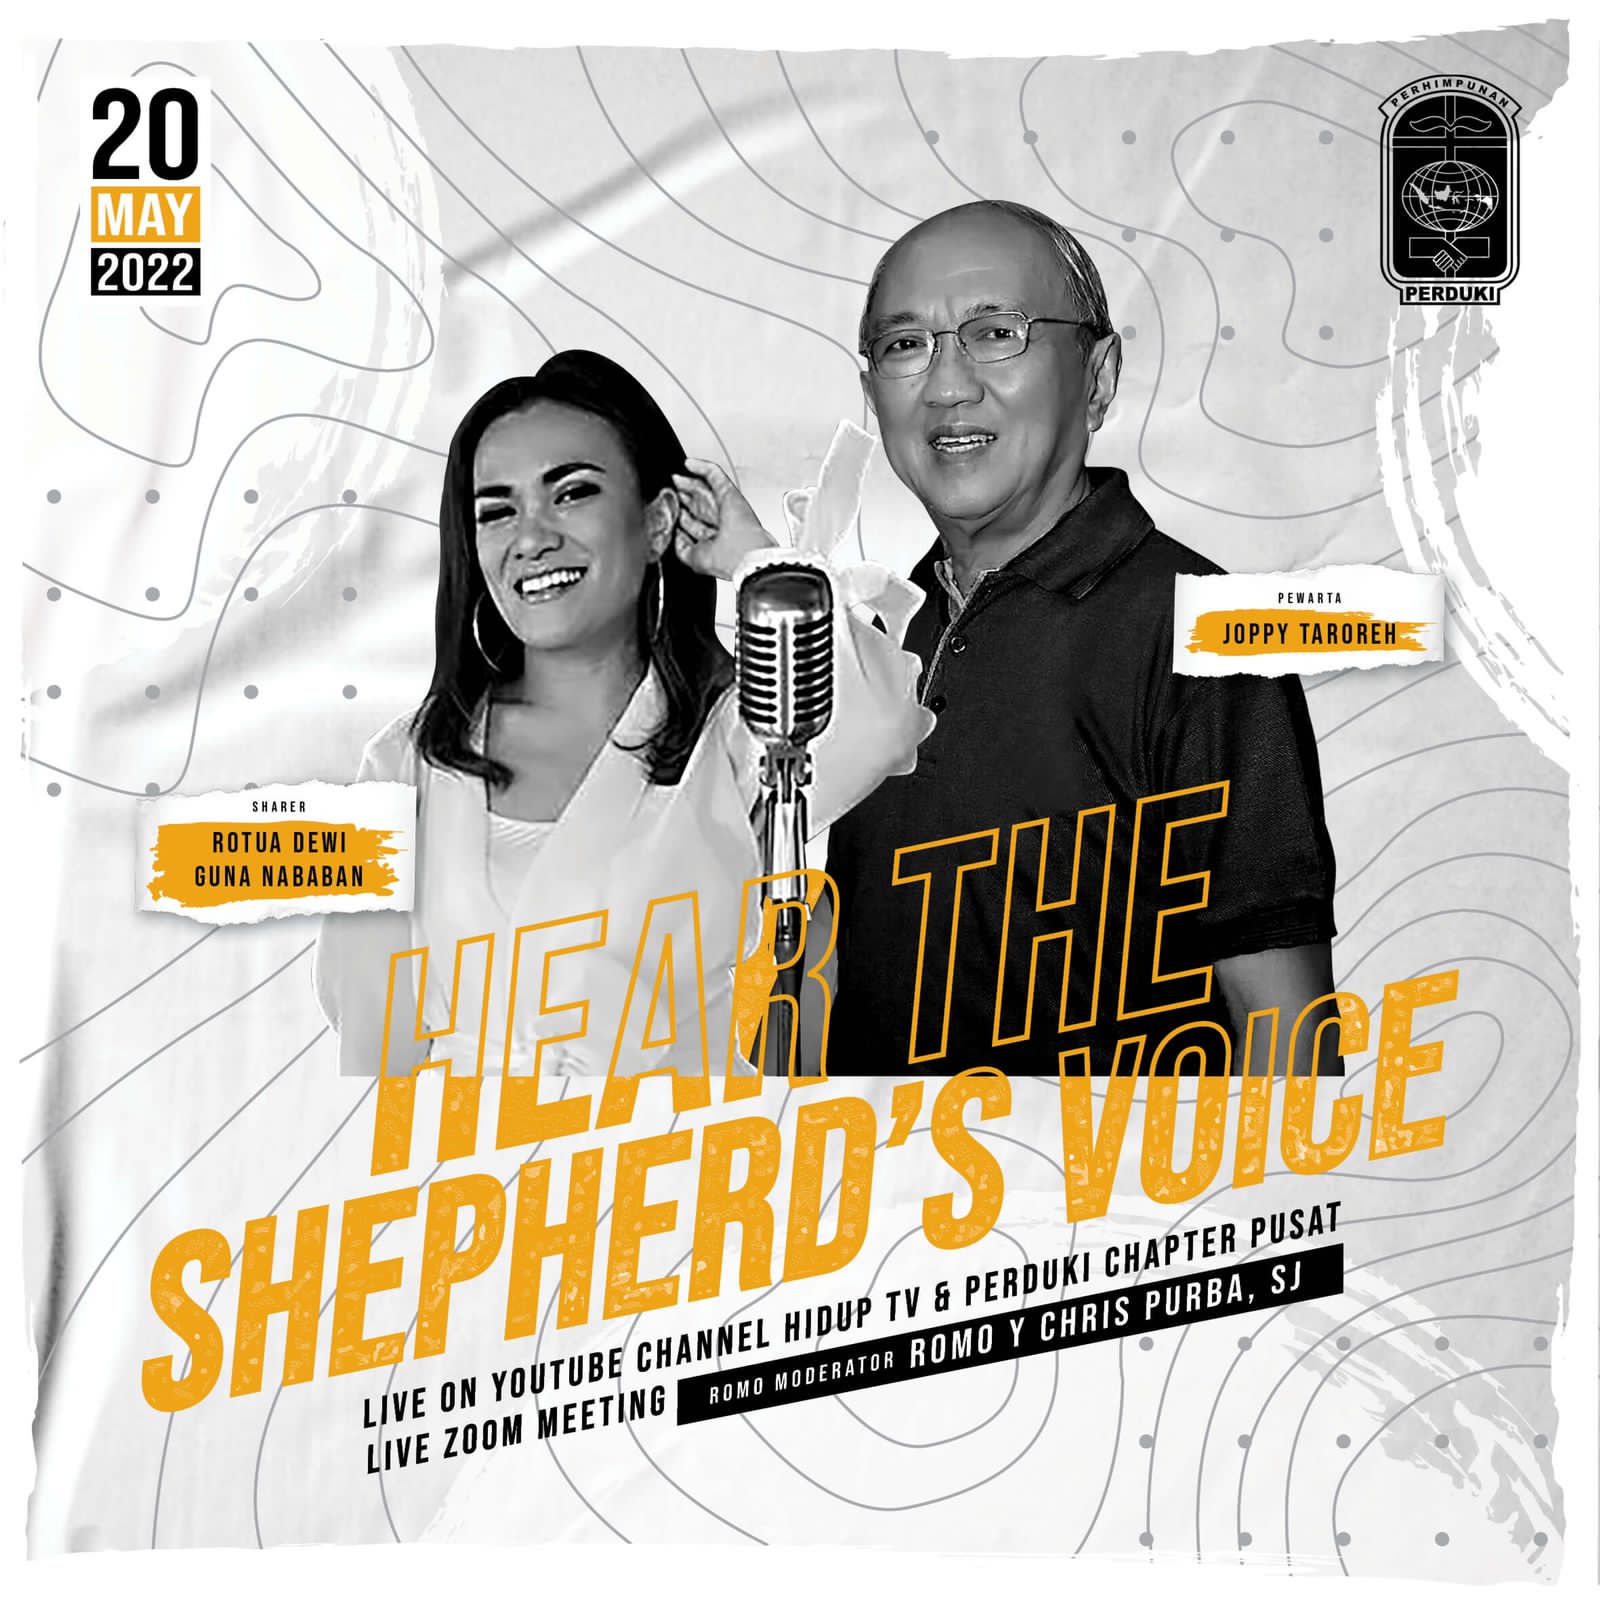 HEAR THE SHEPHERD’S VOICE